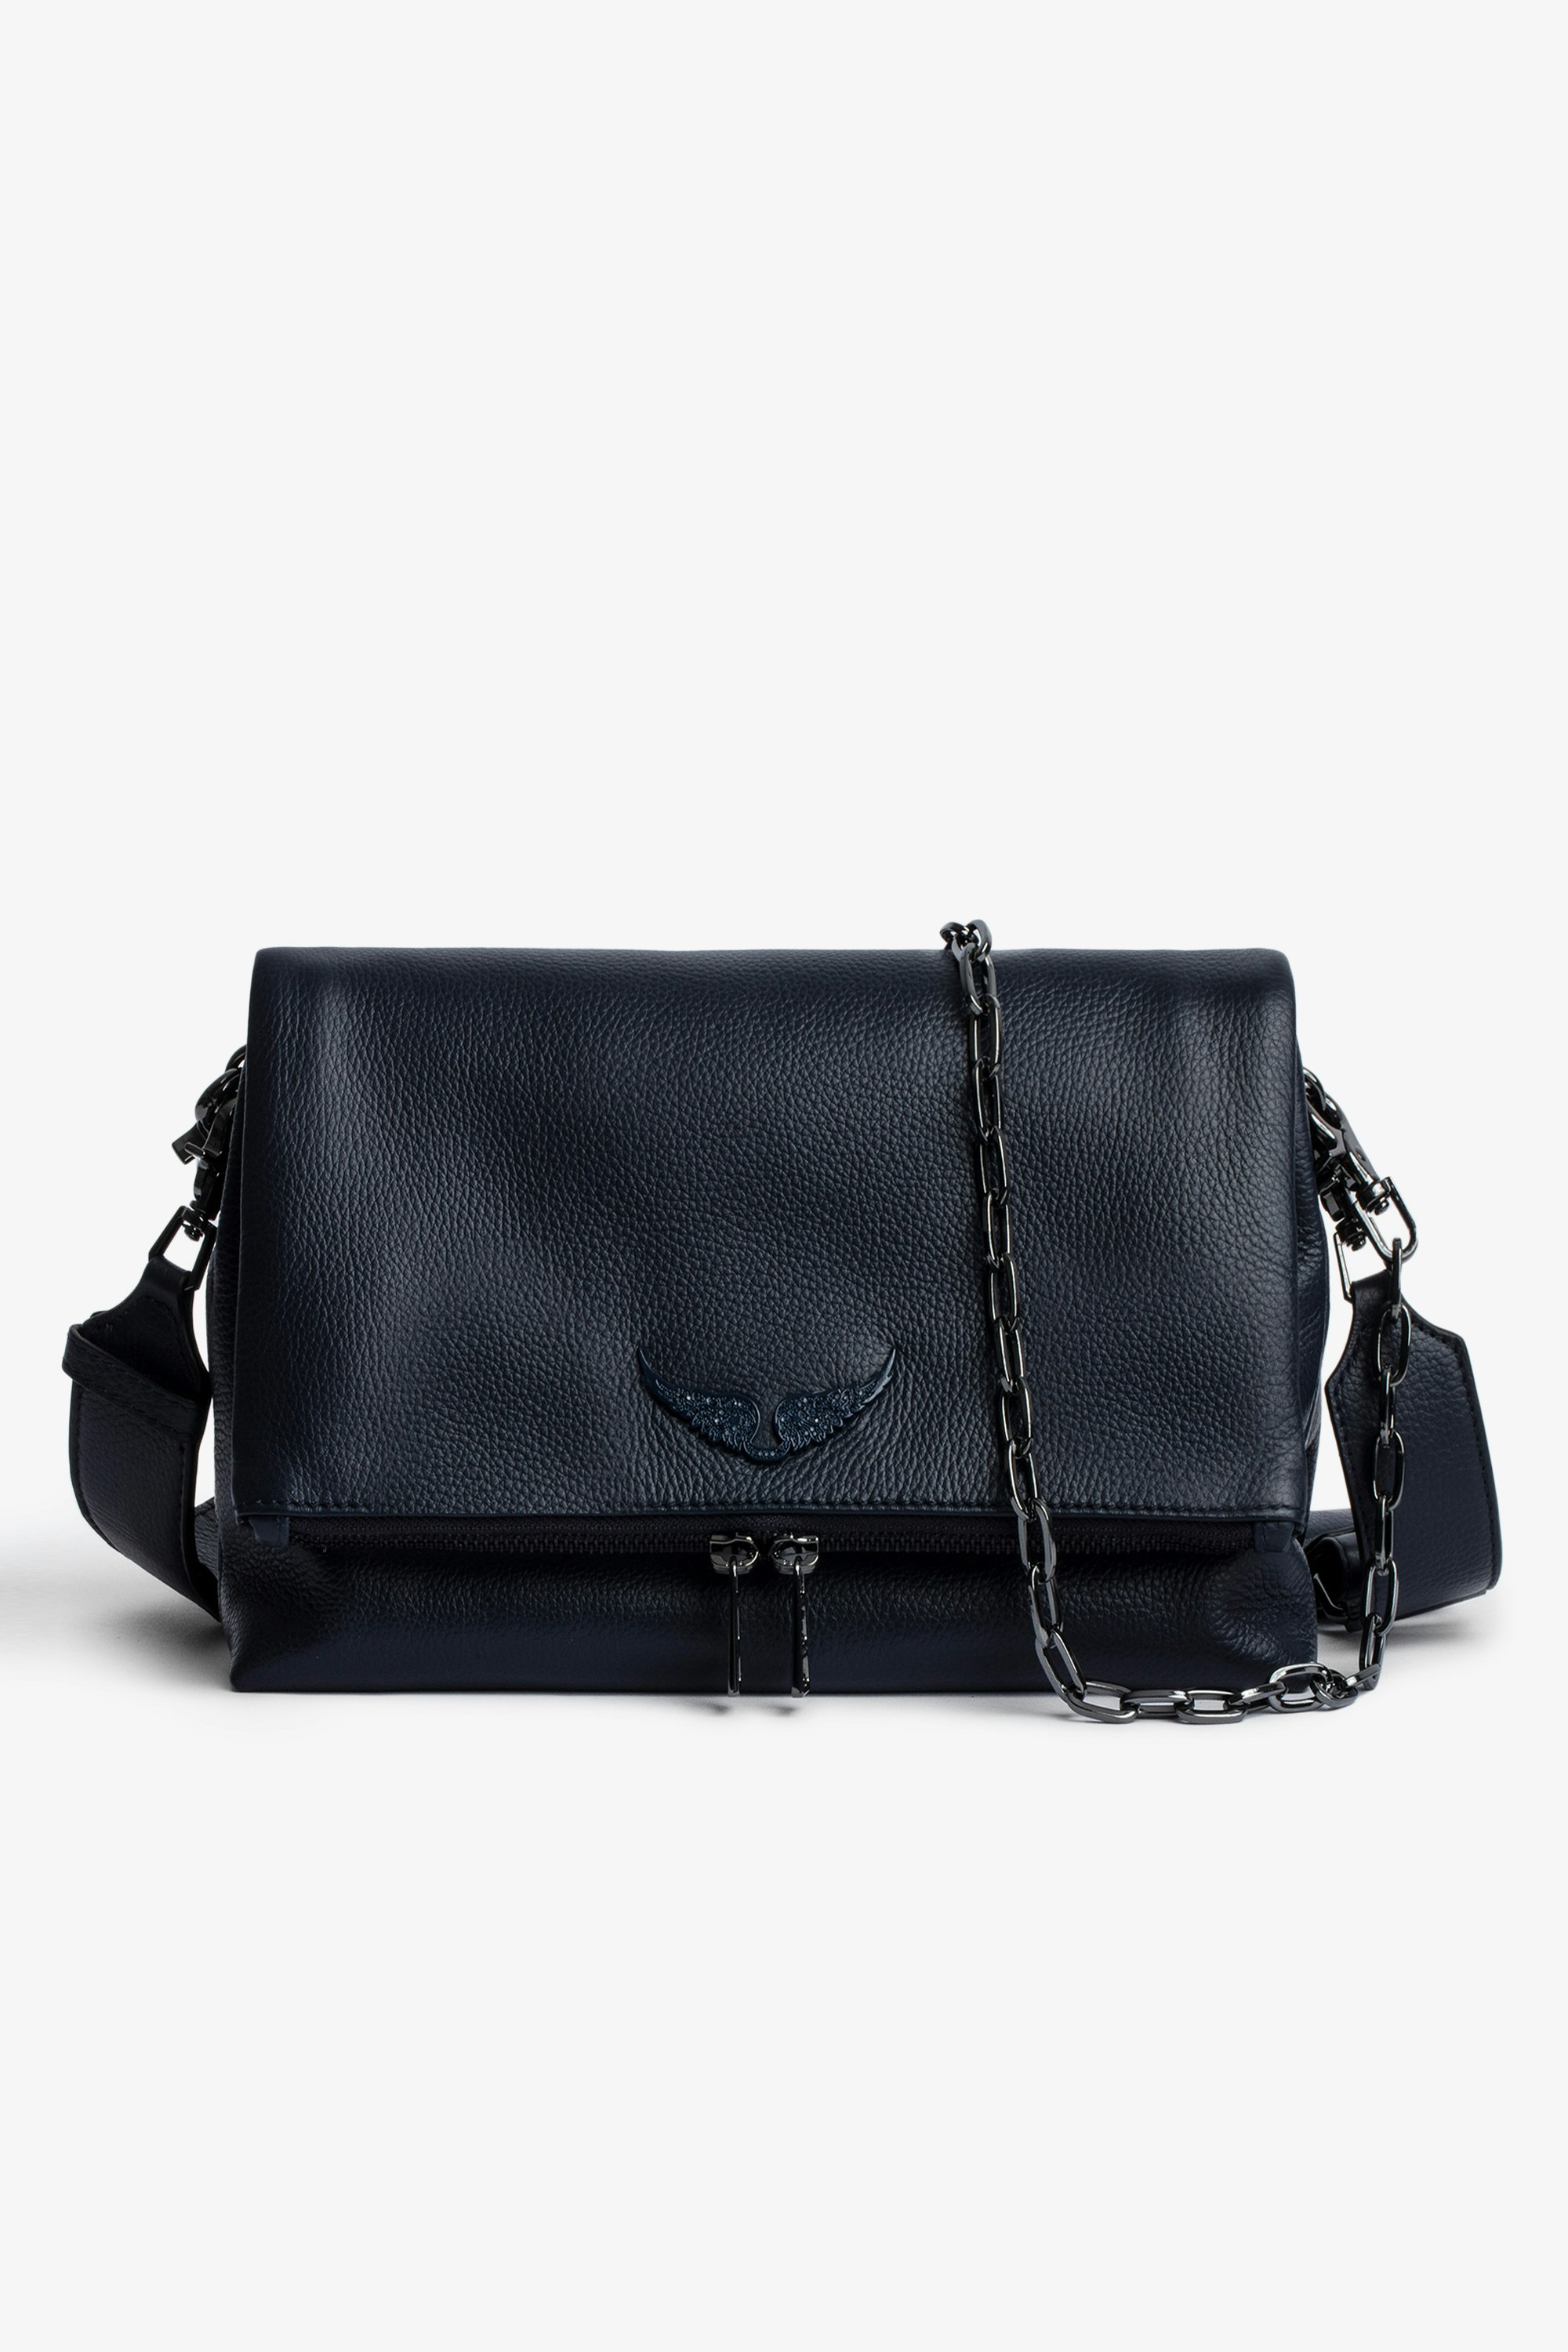 Rocky バッグ Women’s Rocky bag in navy blue leather
